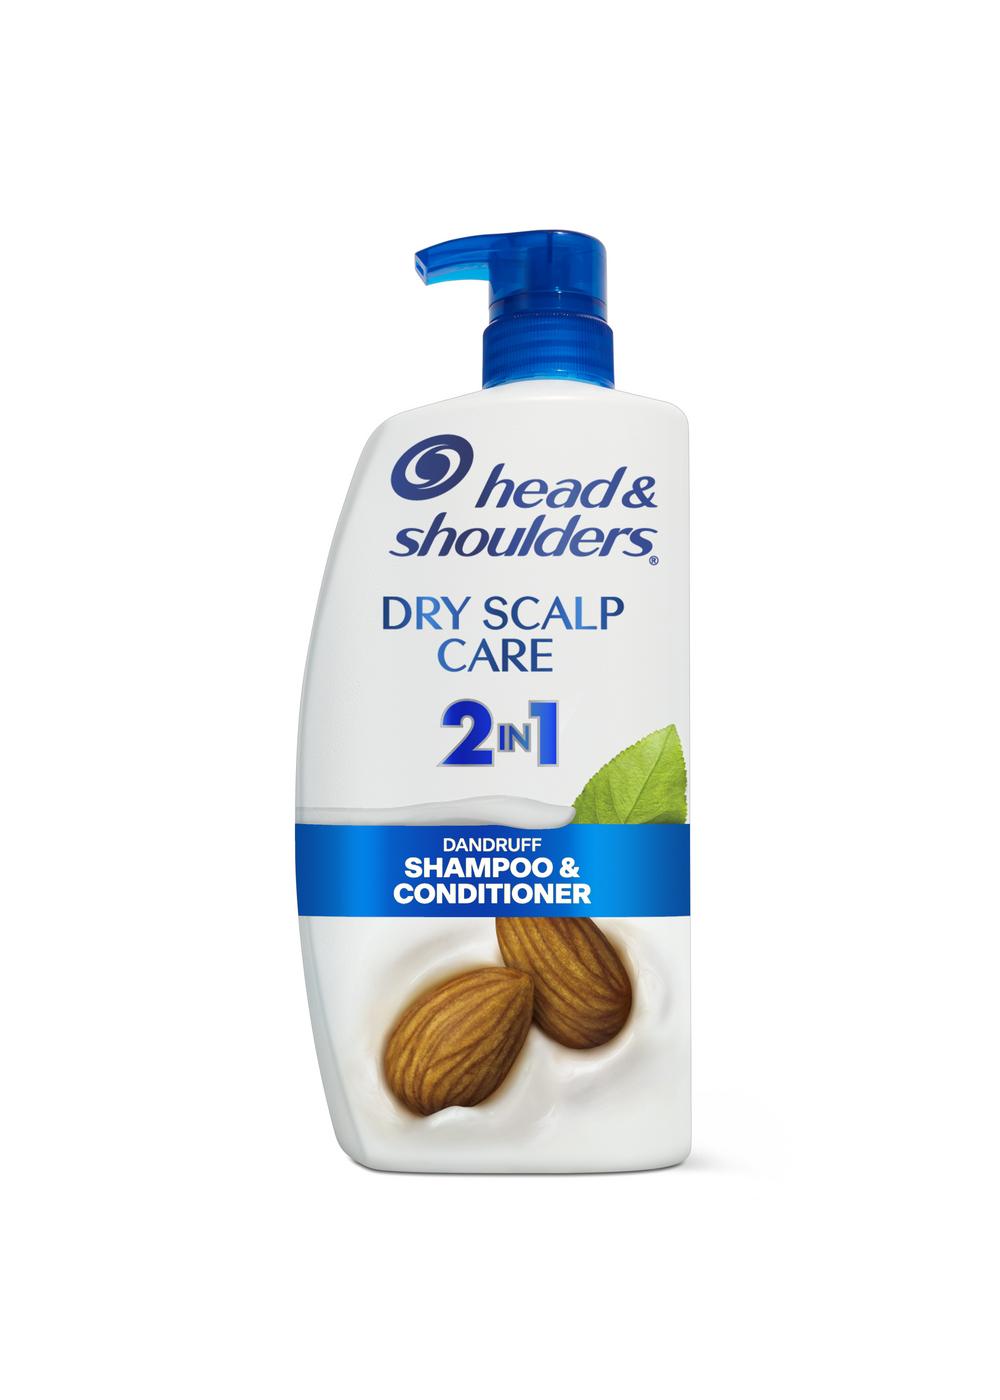 Head & Shoulders 2 in 1 Dandruff Shampoo + Conditioner - Dry Scalp Care; image 4 of 11